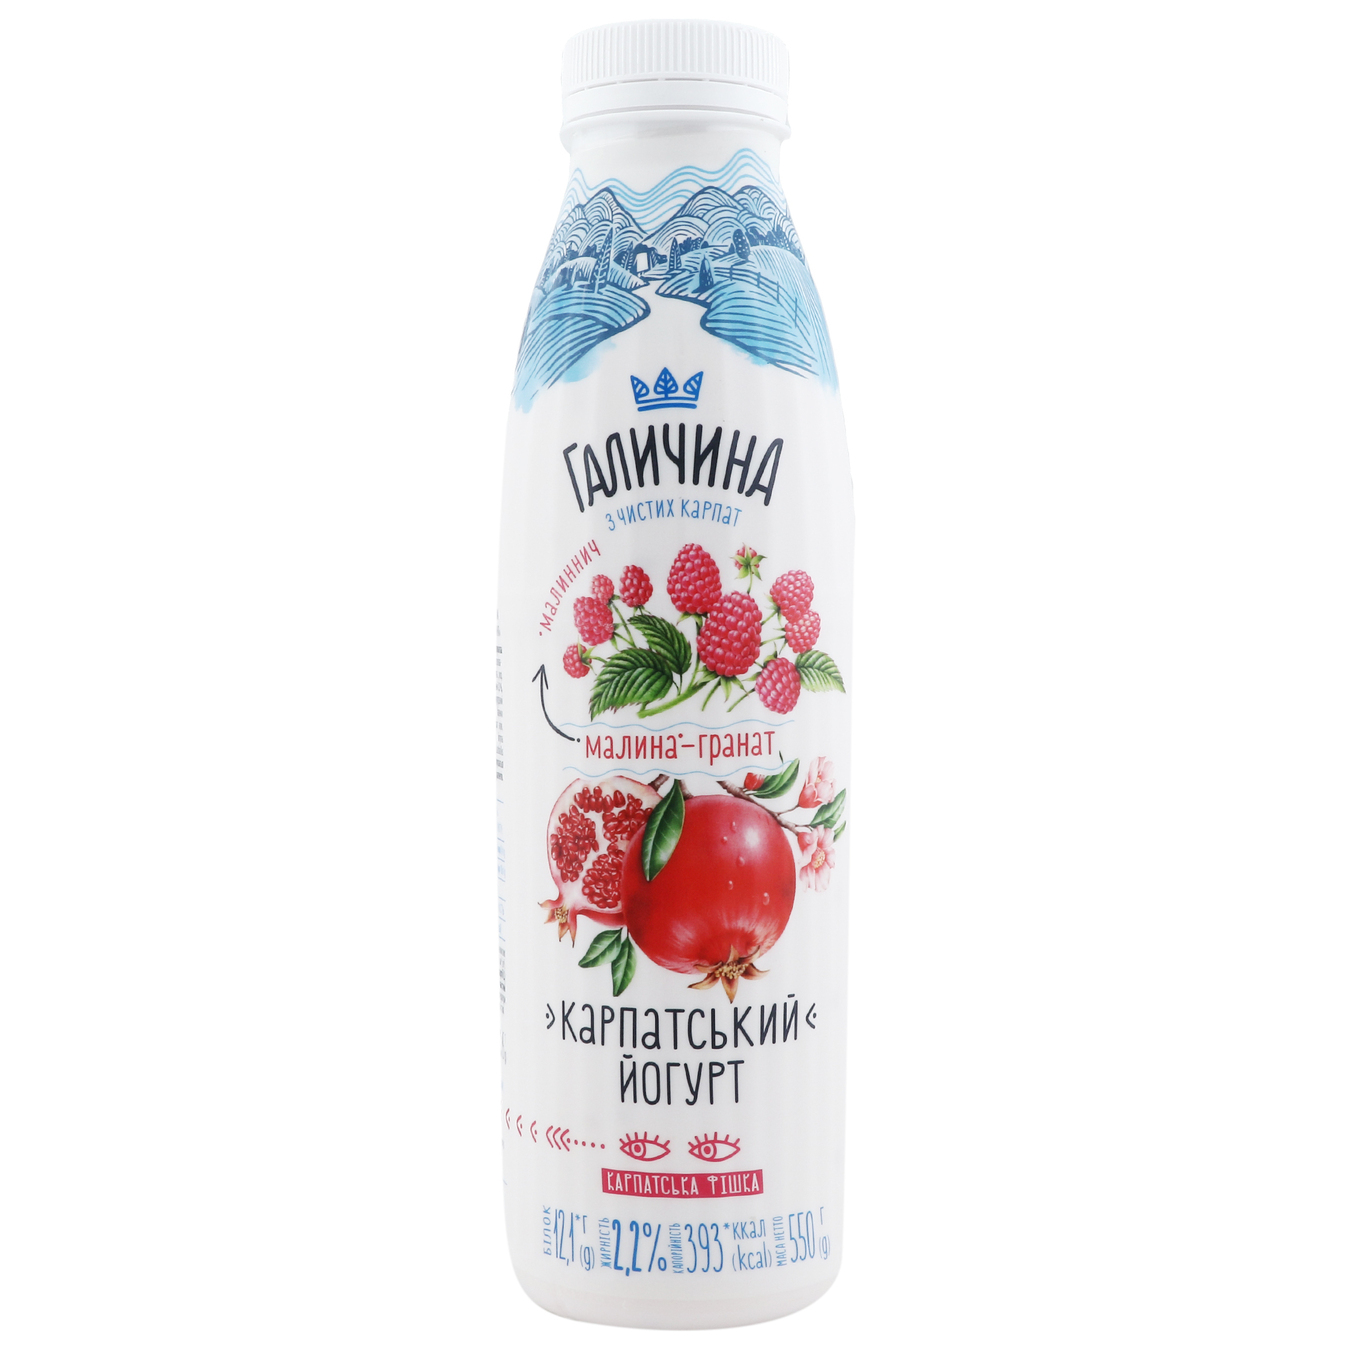 Galicia Yogurt Raspberry-pomegranate 2.2% 550g